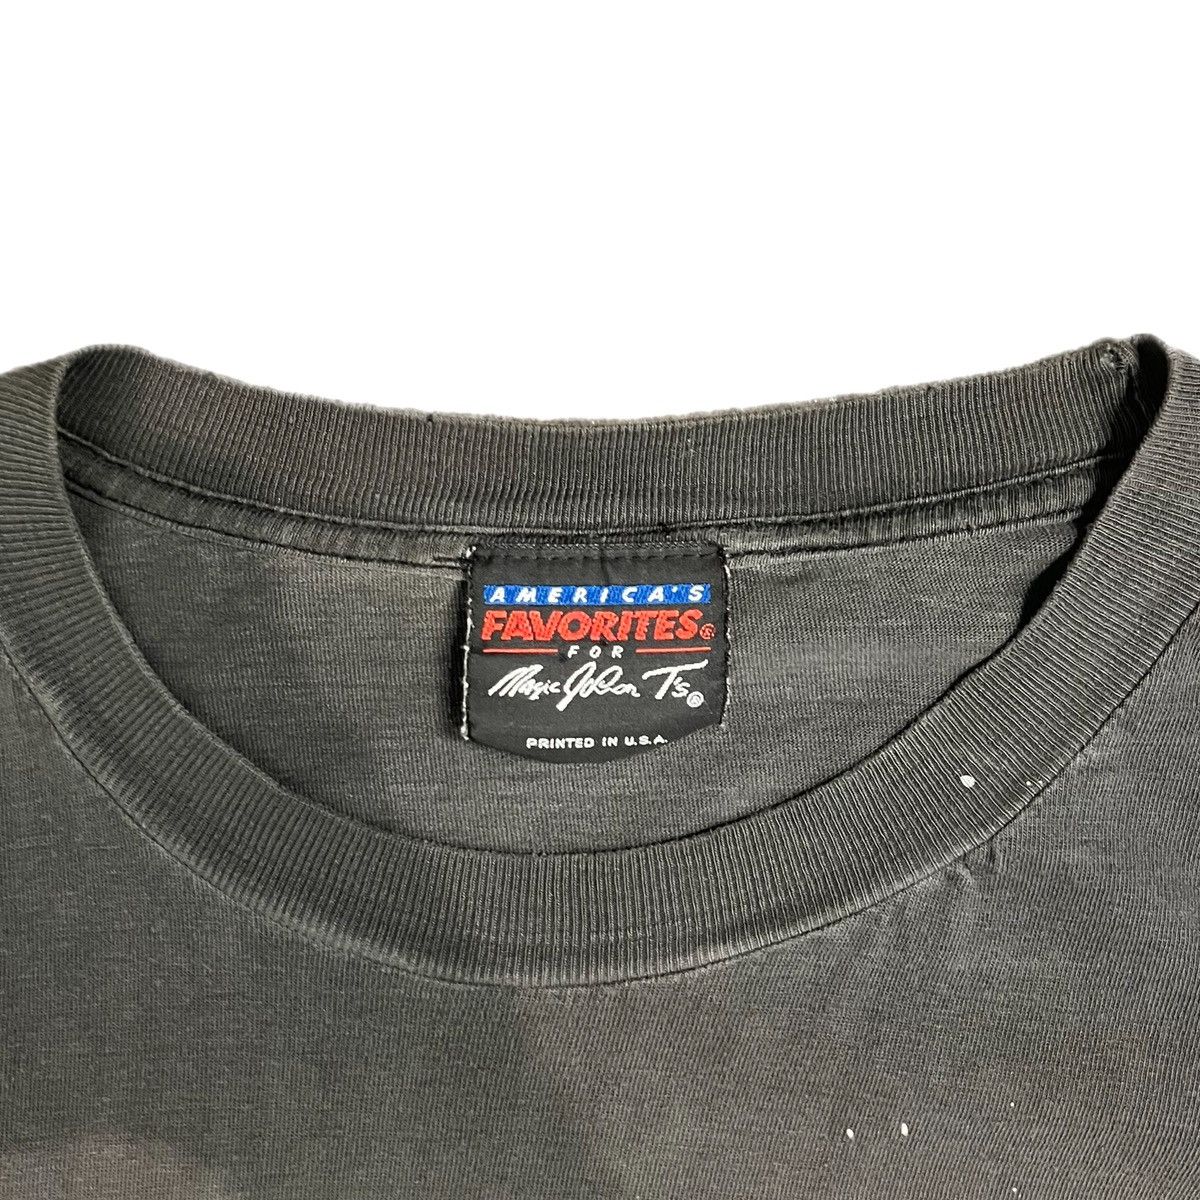 Vintage Vintage 1994 Philadelphia Flyers Tshirt NHL Single Stitch Size US L / EU 52-54 / 3 - 4 Preview